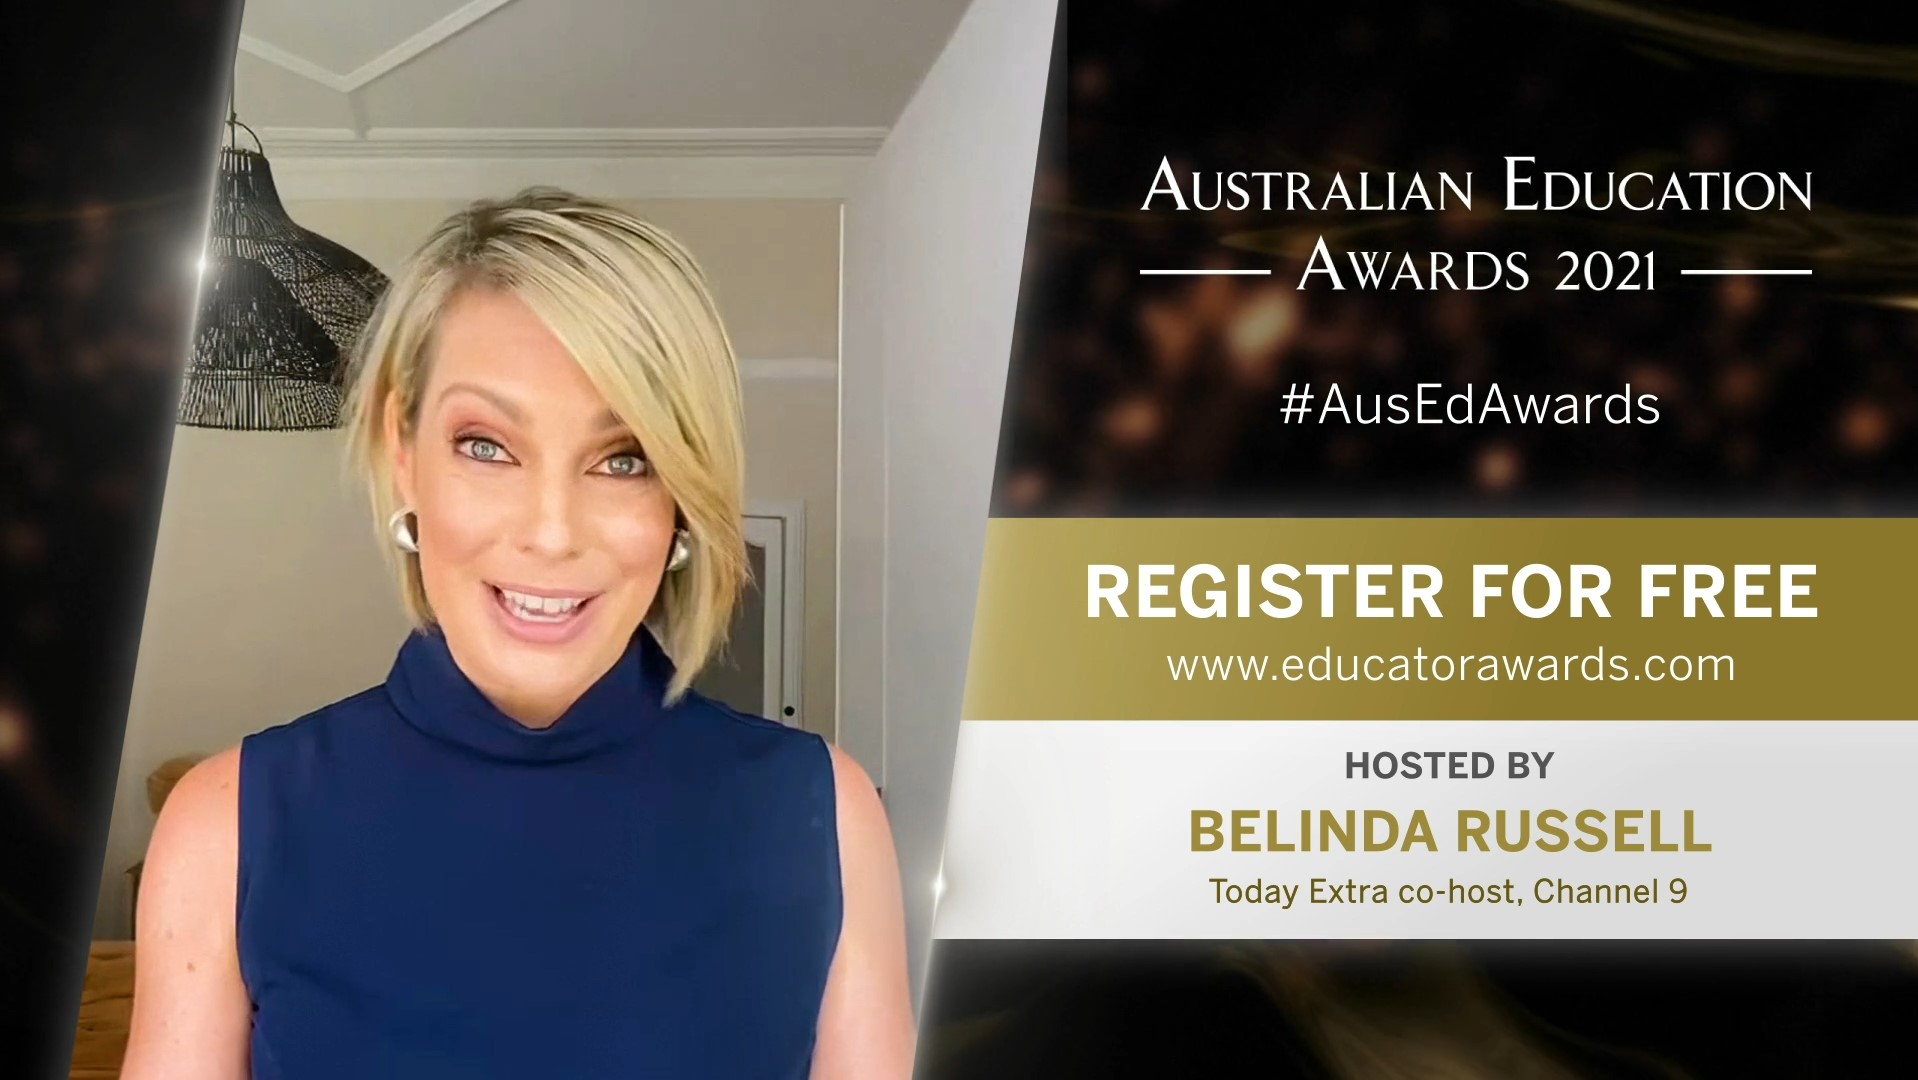 Meet your host for the virtual Australian Education Awards 2021